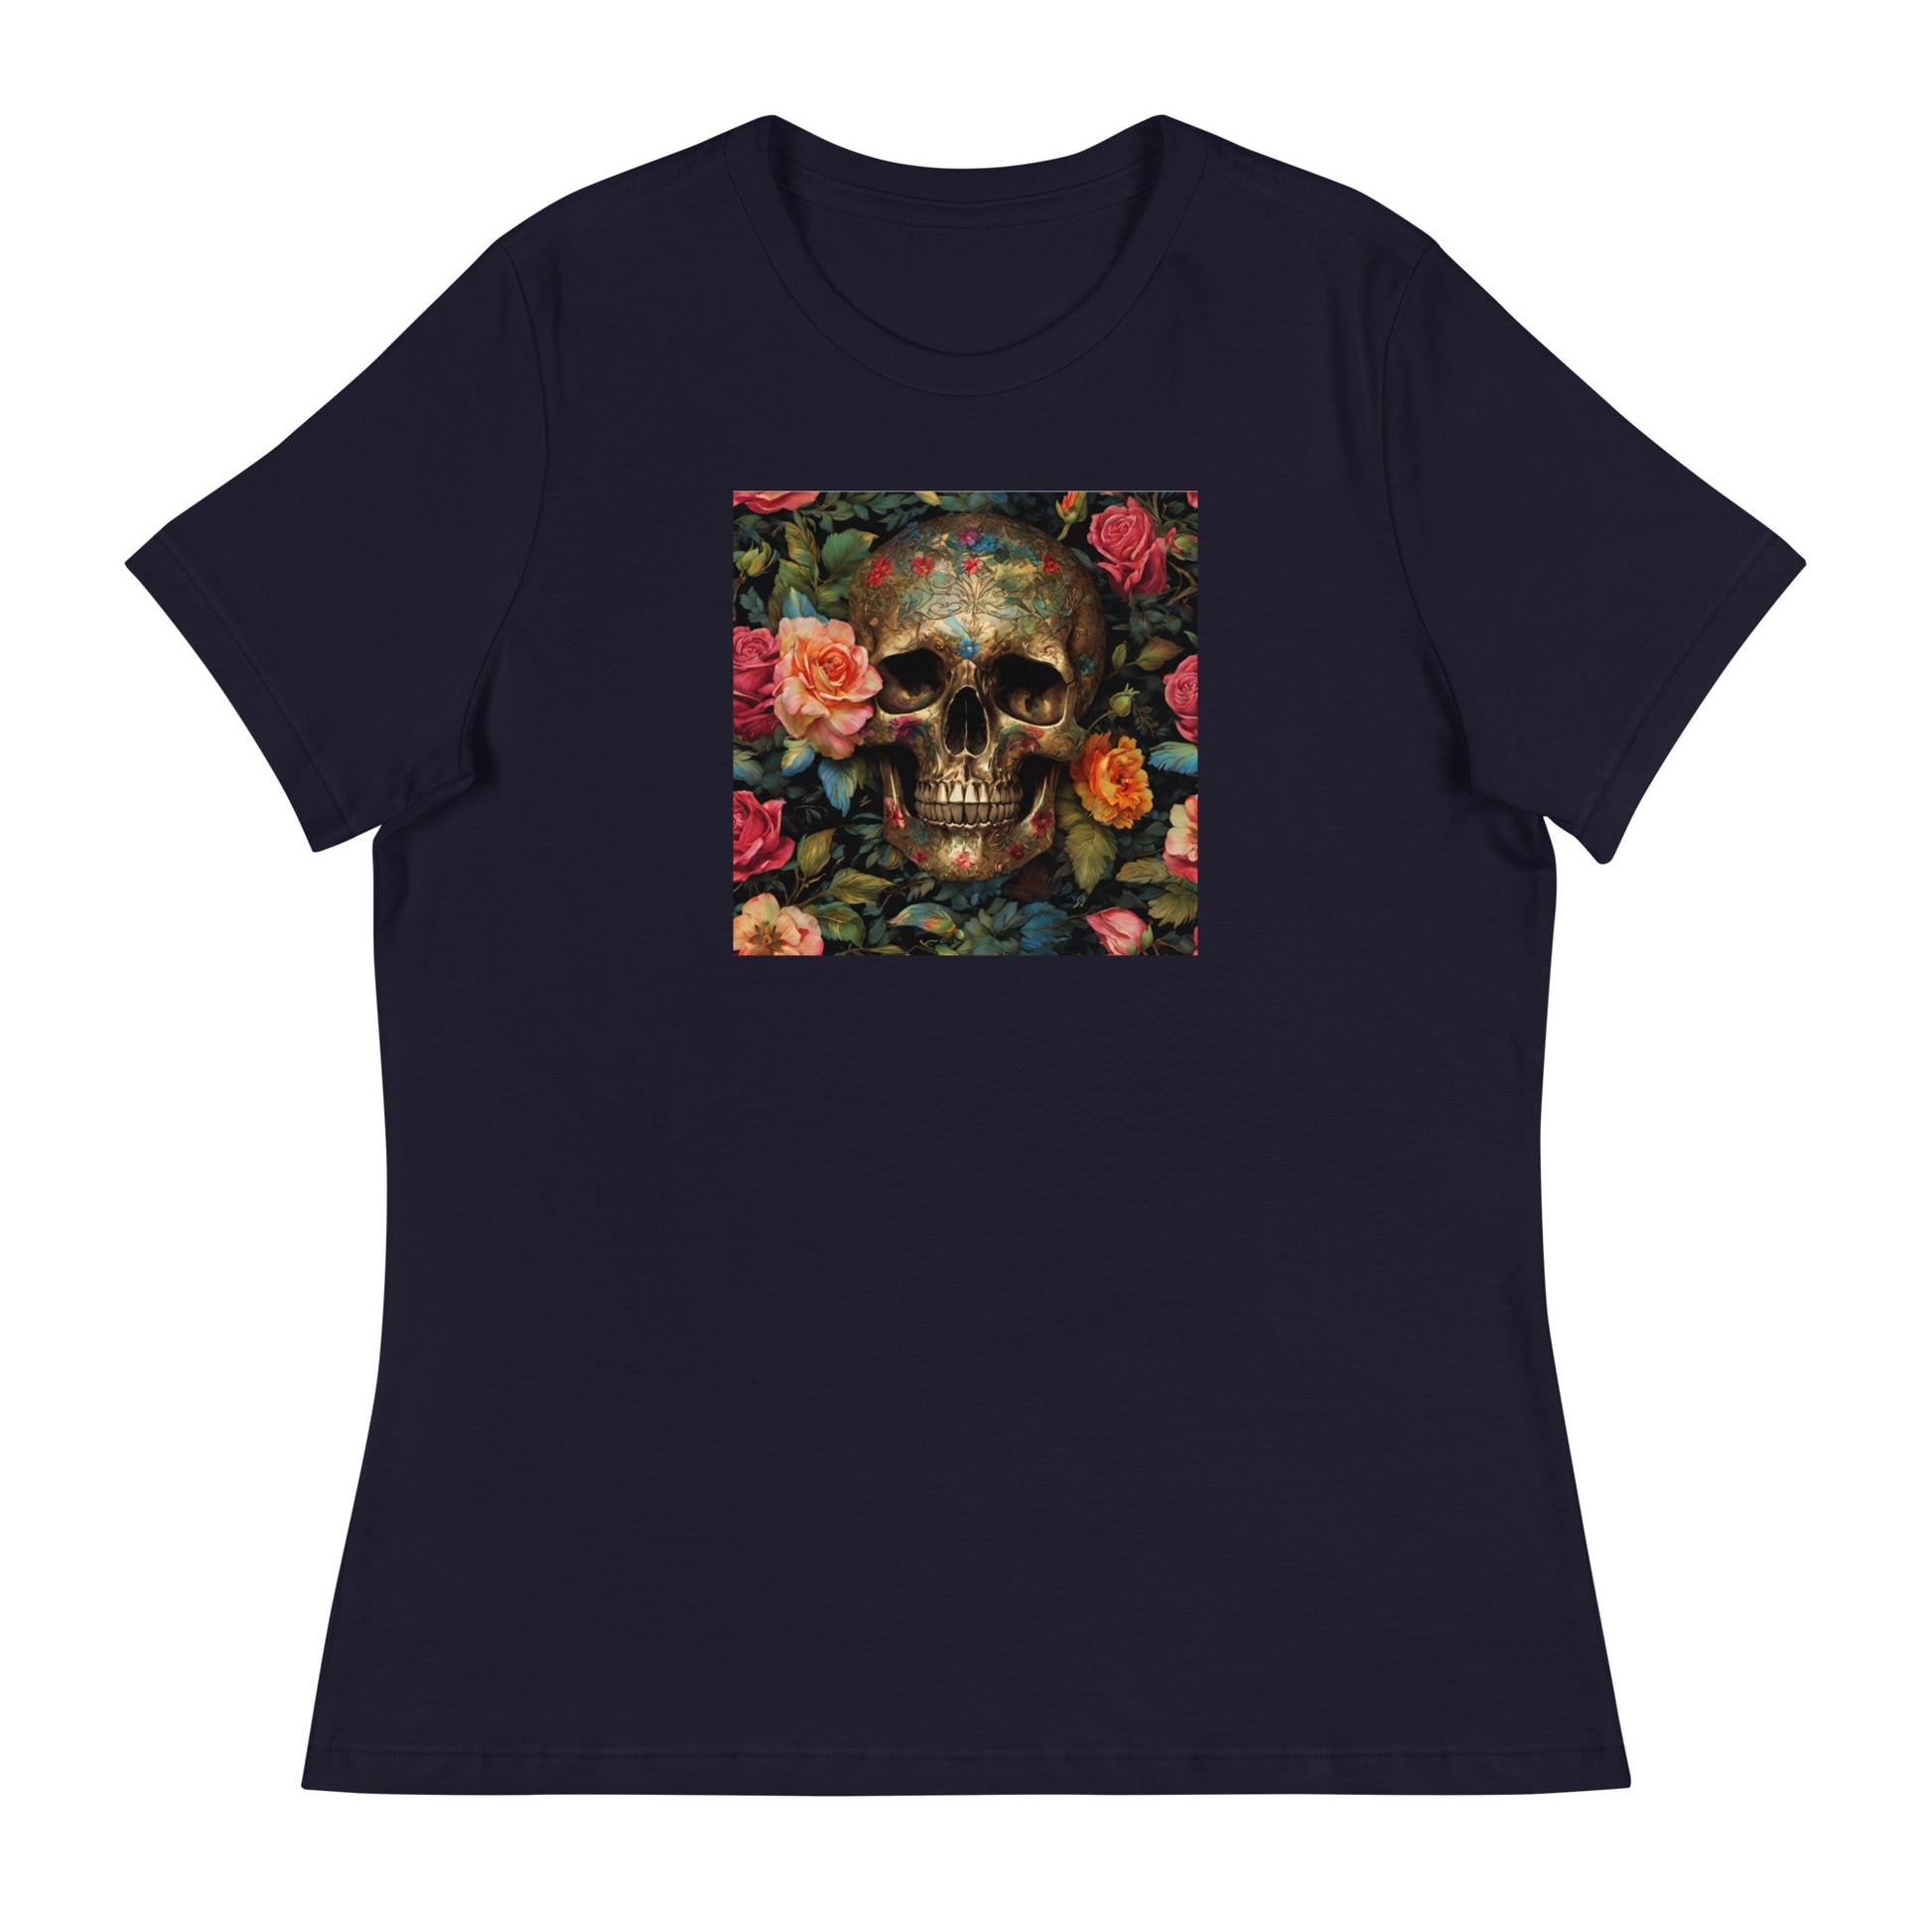 Skull and Roses Graphic Women's T-Shirt Navy